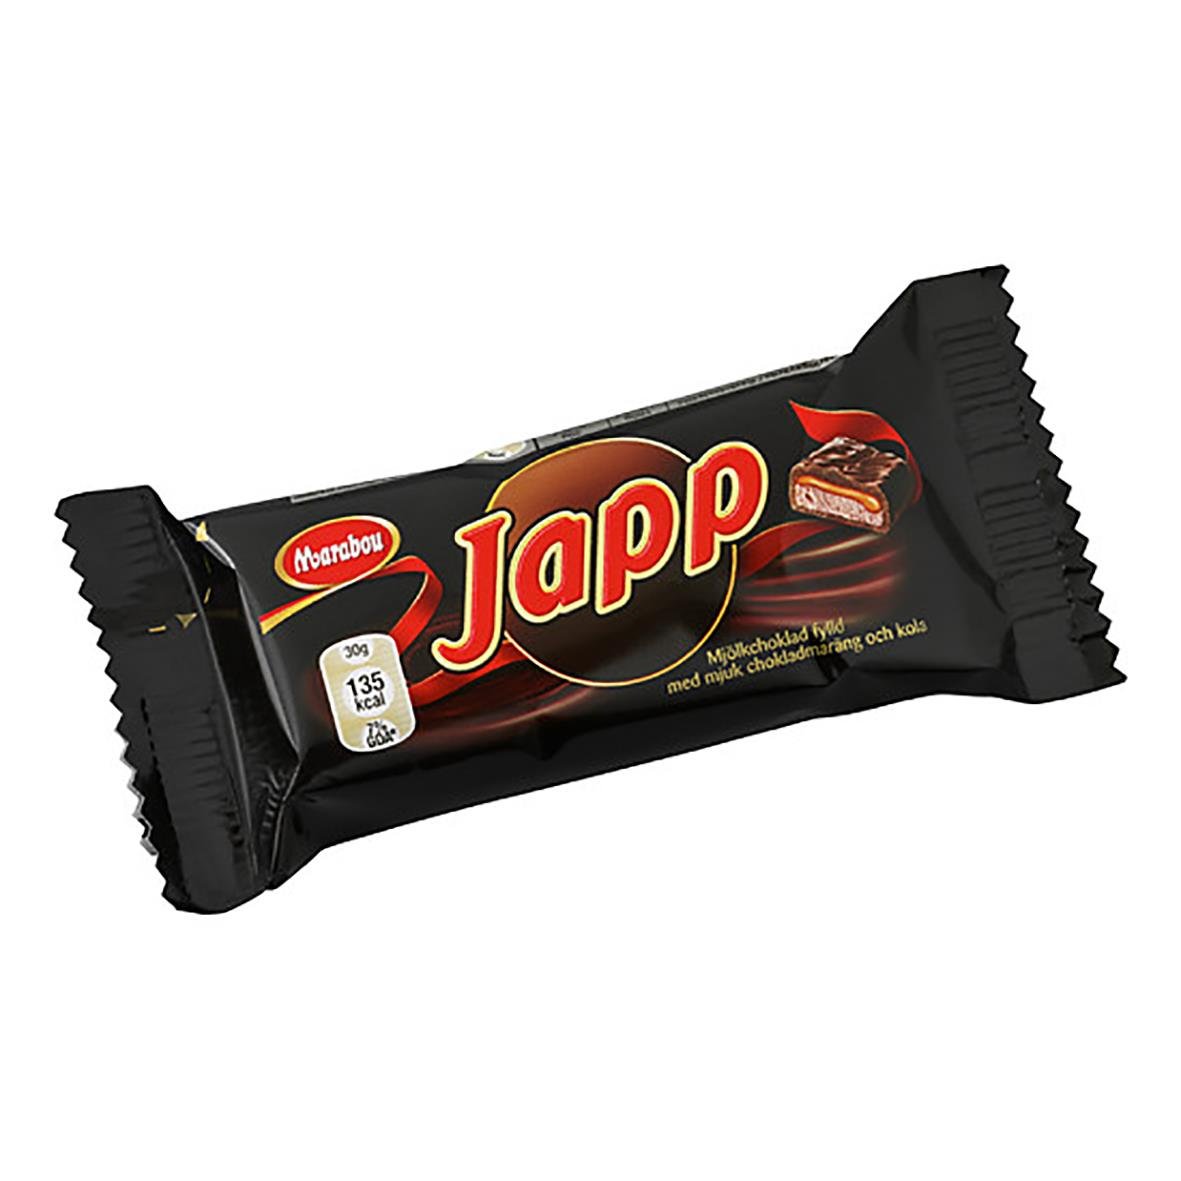 Choklad Marabou Japp Single 30g 60010698